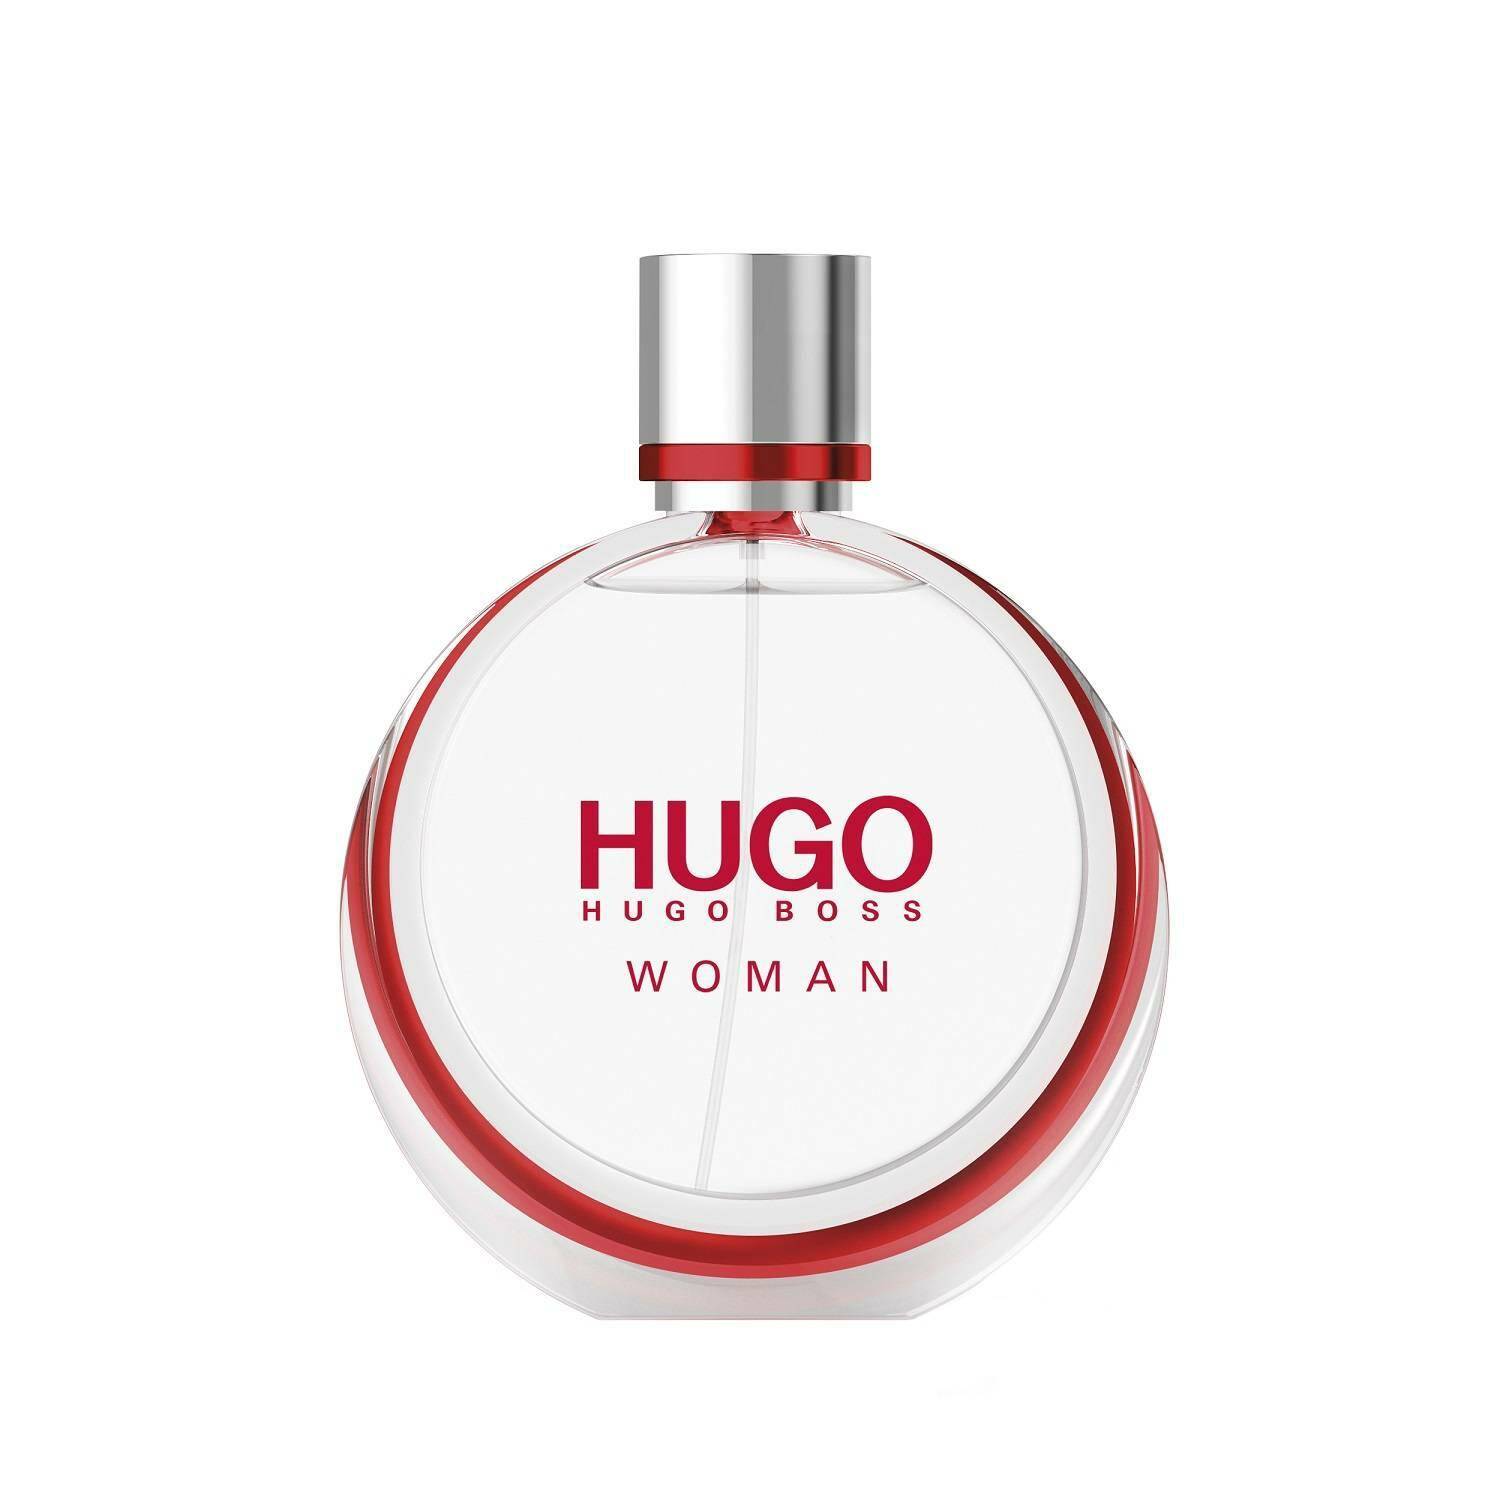 Hugo Boss Woman woda perfumowana 50ml